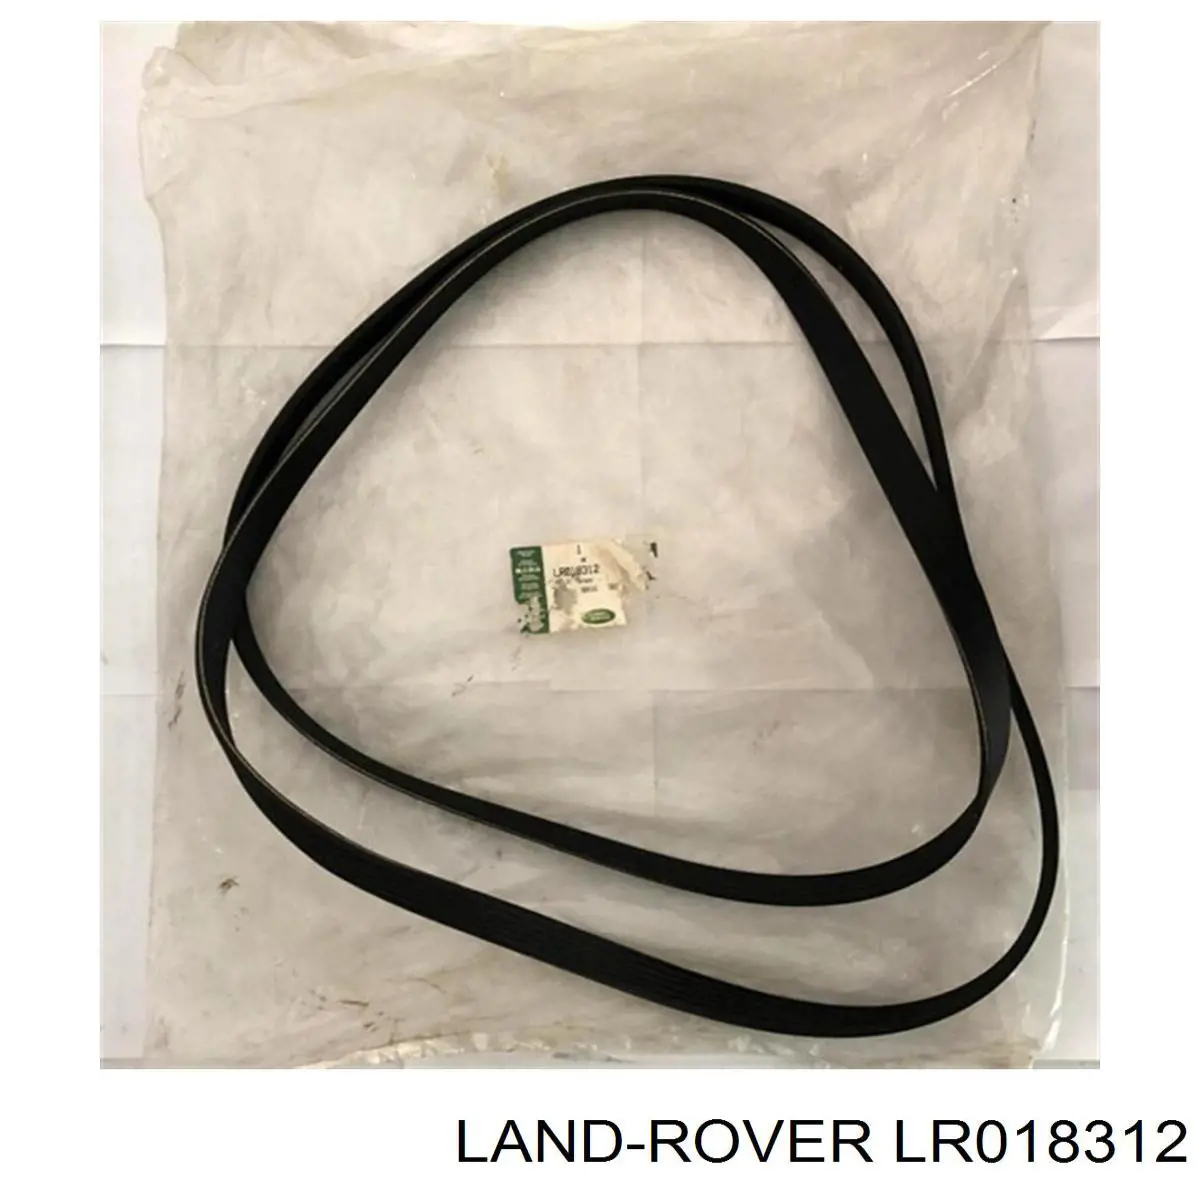 LR018312 Land Rover correa trapezoidal